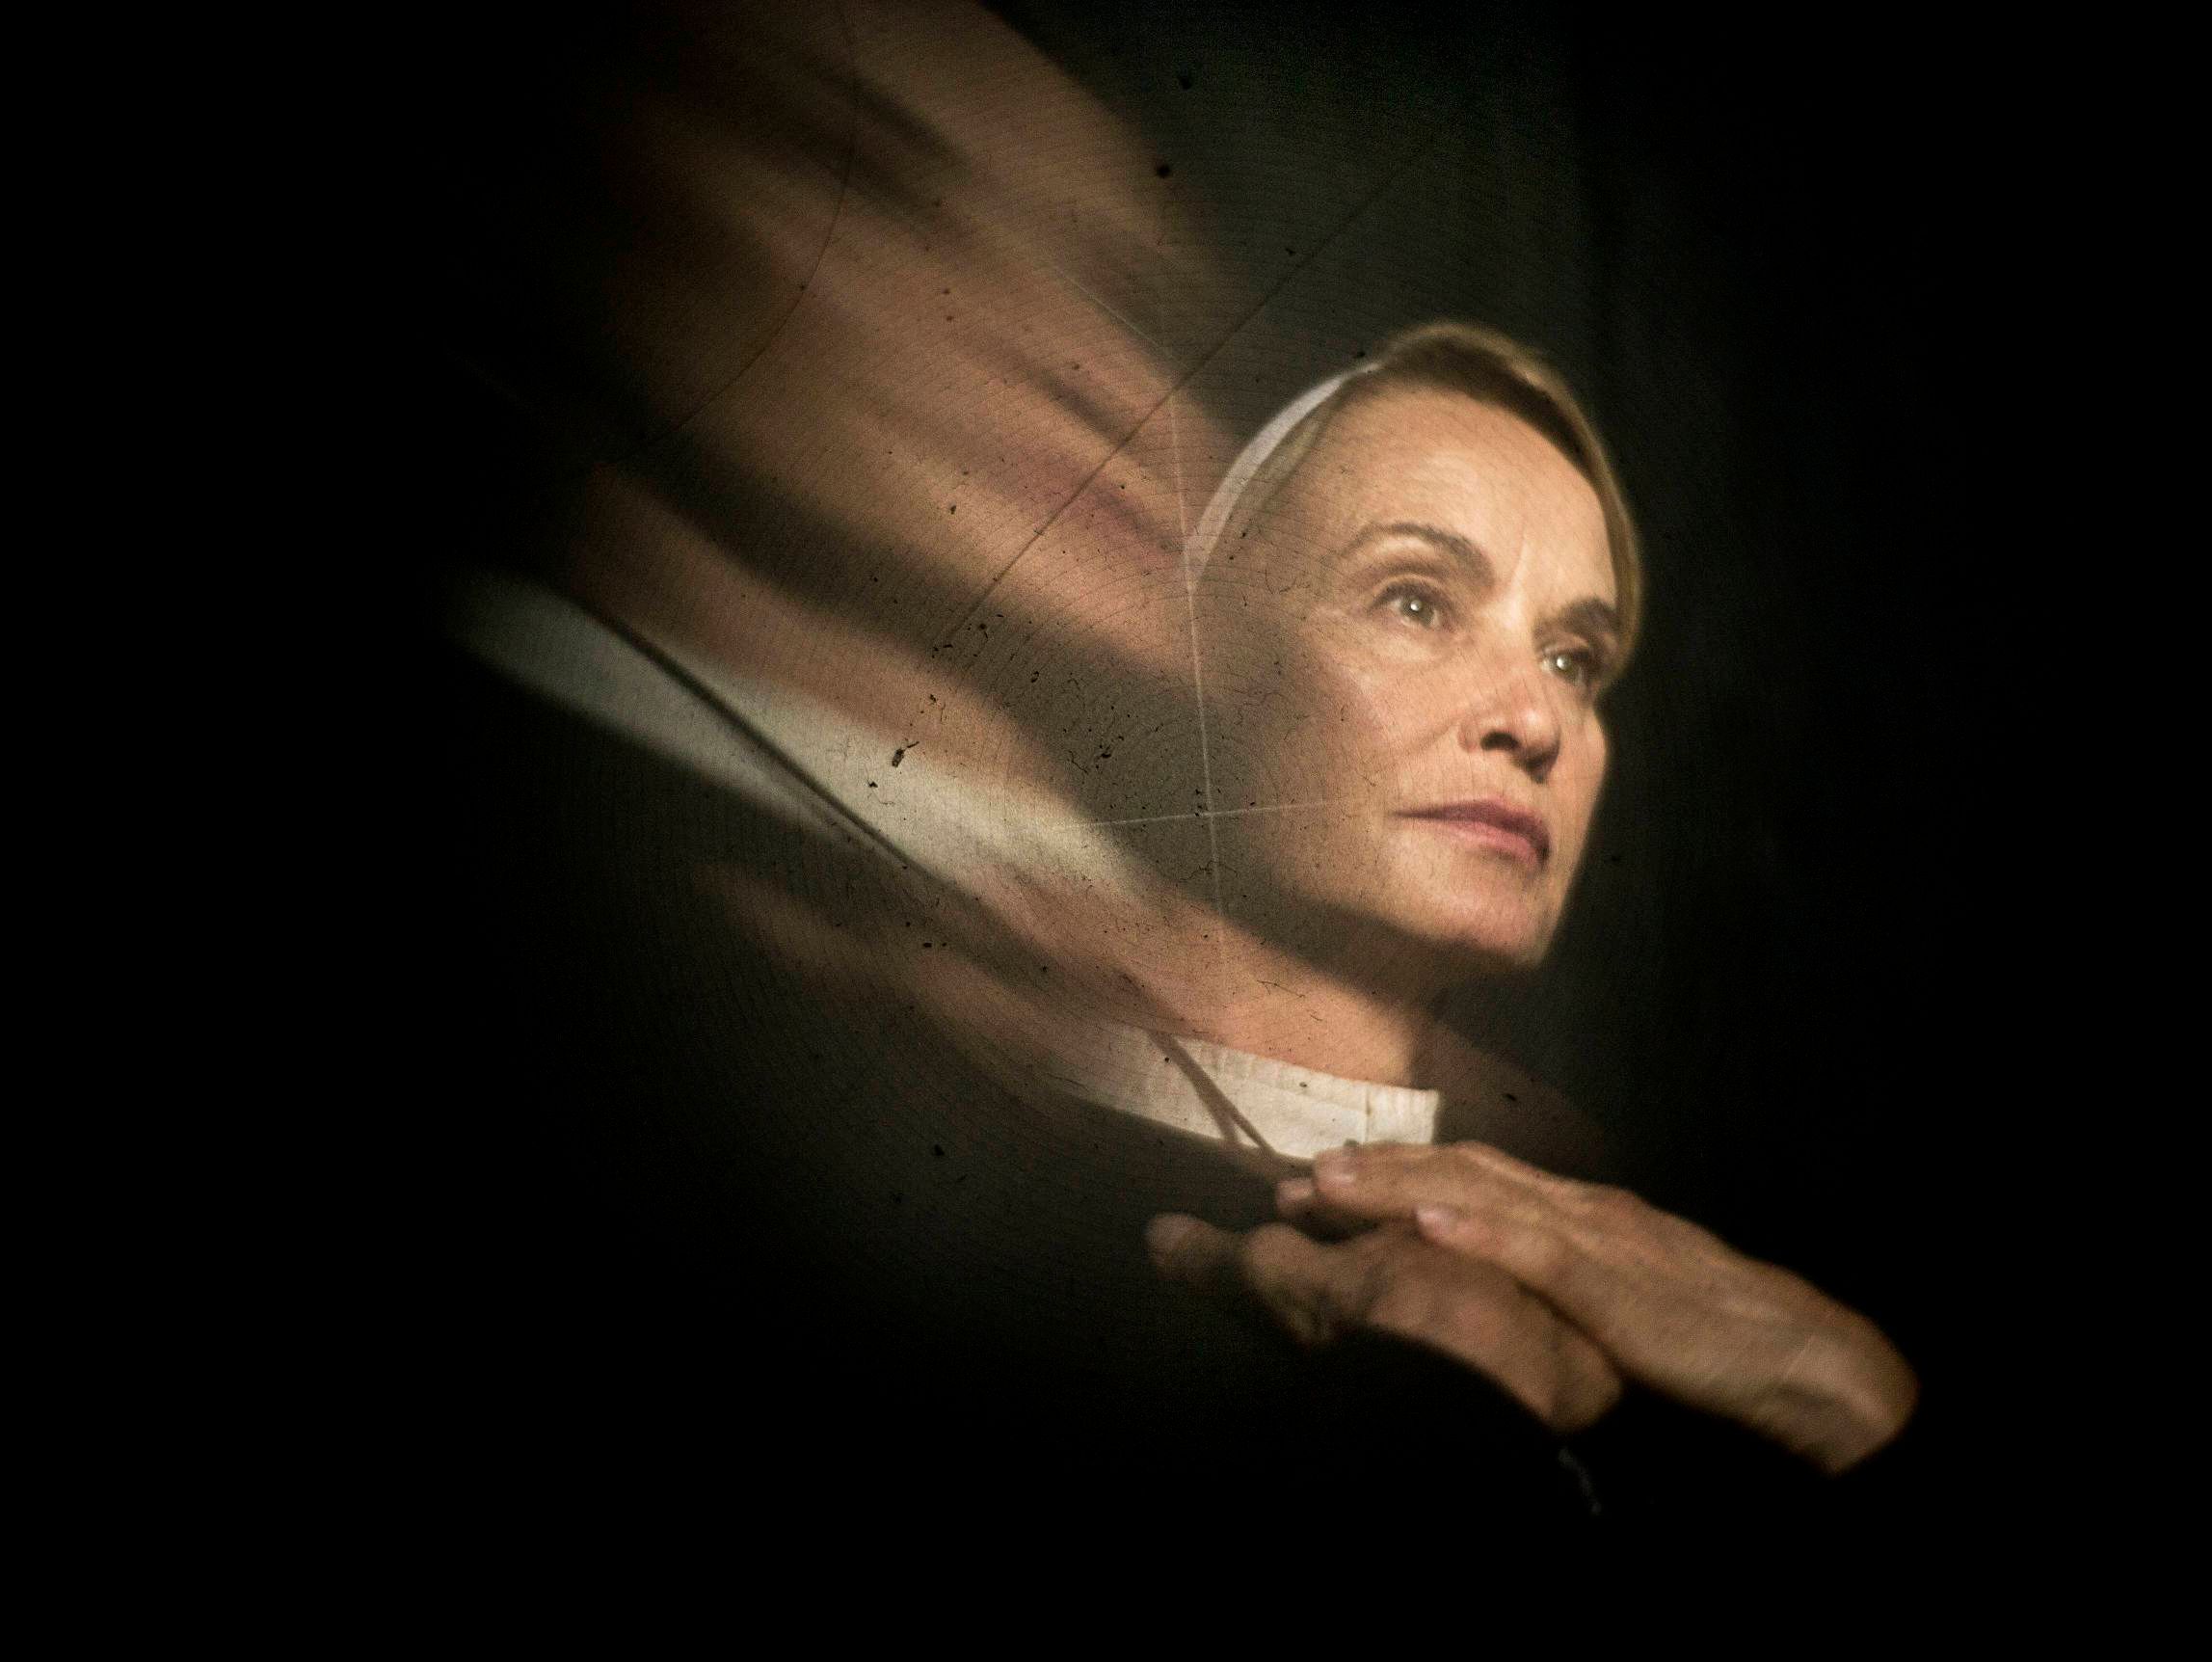 American Horror Story: Asylum Jessica Lange Photo